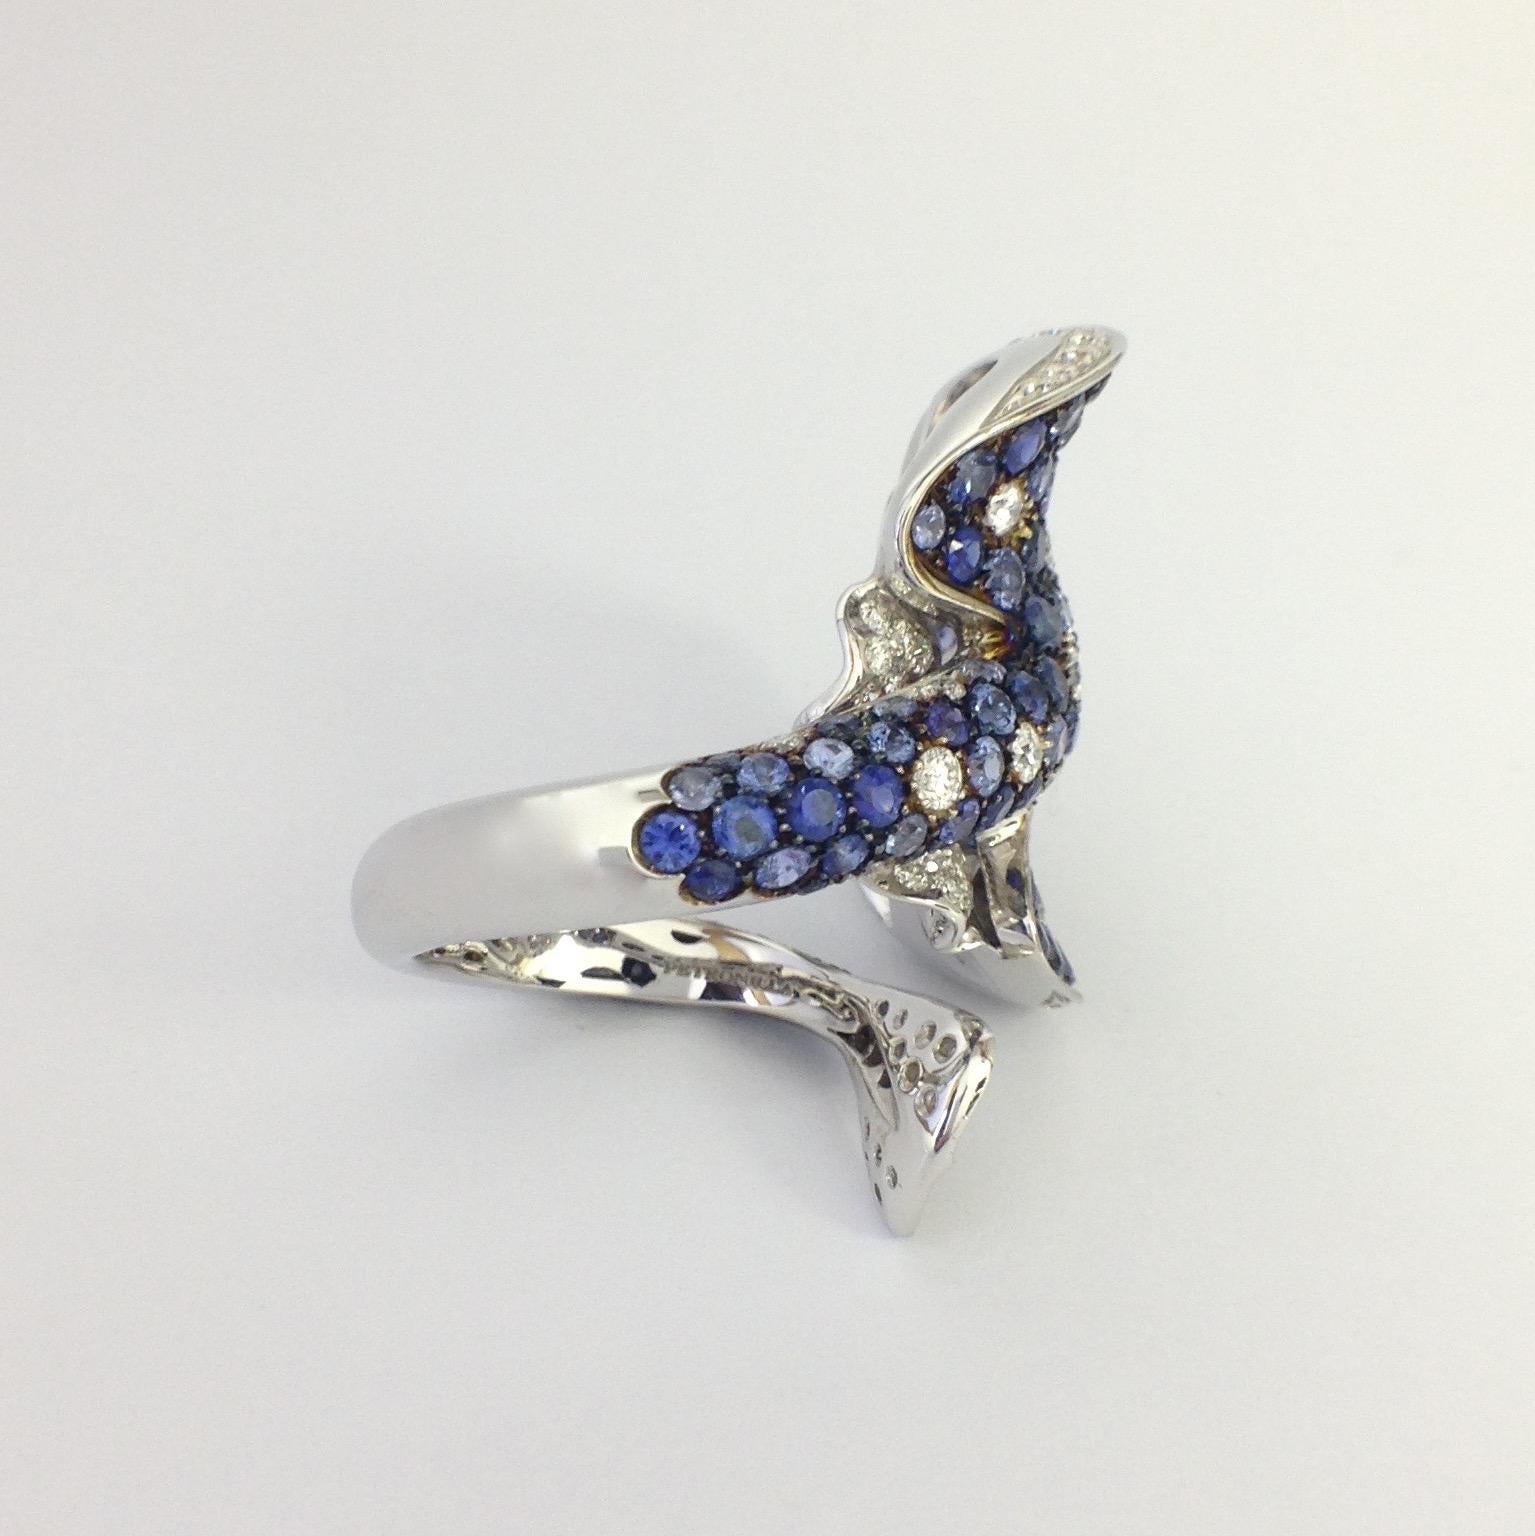 Ray Fish White Diamond Blue Sapphire 18 Karat Gold Ring Made in Italy Petronilla 8